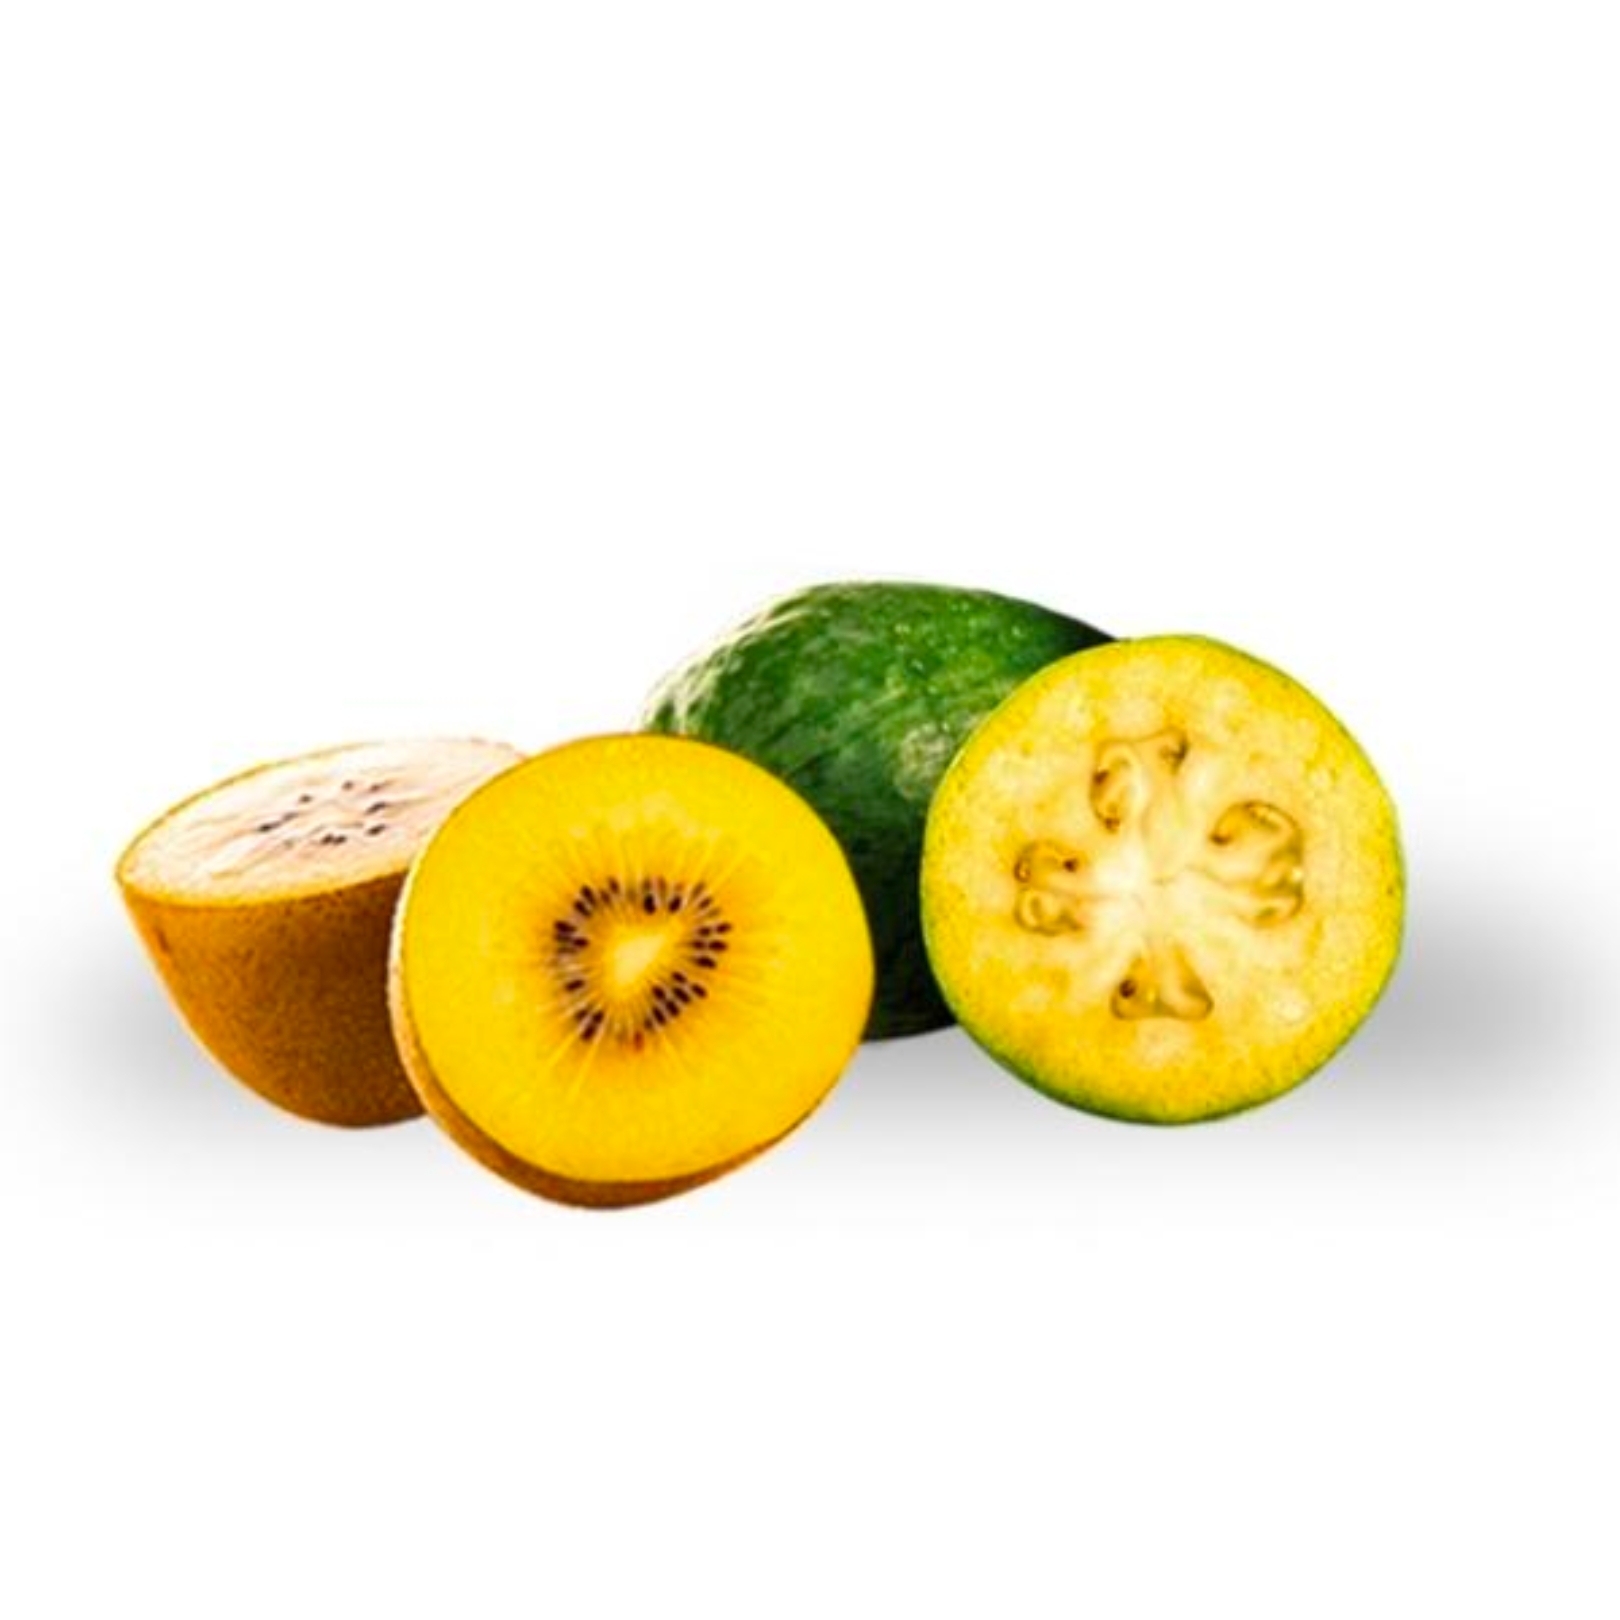 Buy Kiwifruit Feijoa Online NZ